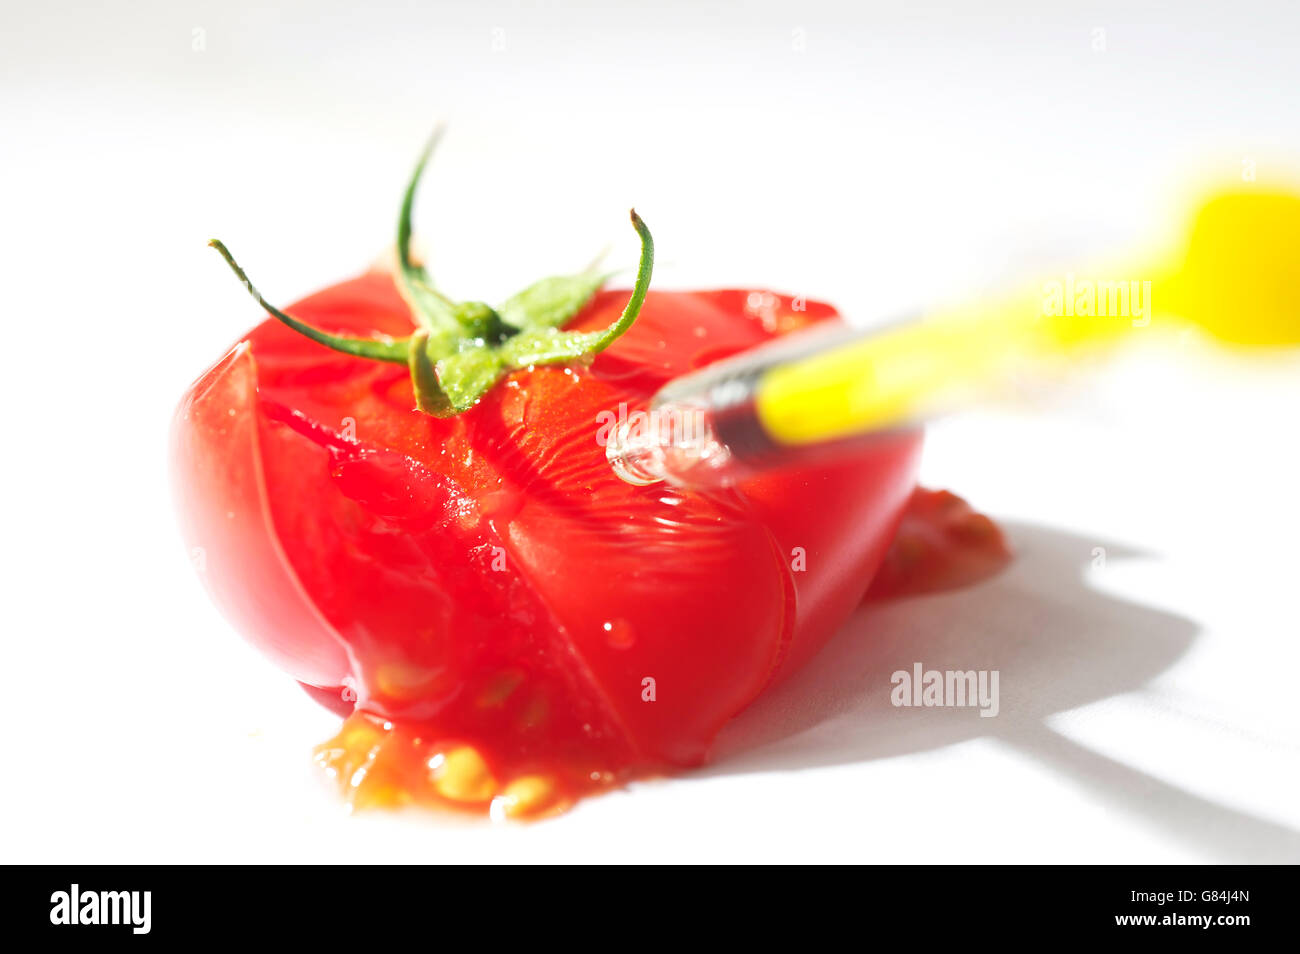 gentechnisch veränderte Pflanzen Tomaten oder transgenen Tomaten Stockfoto